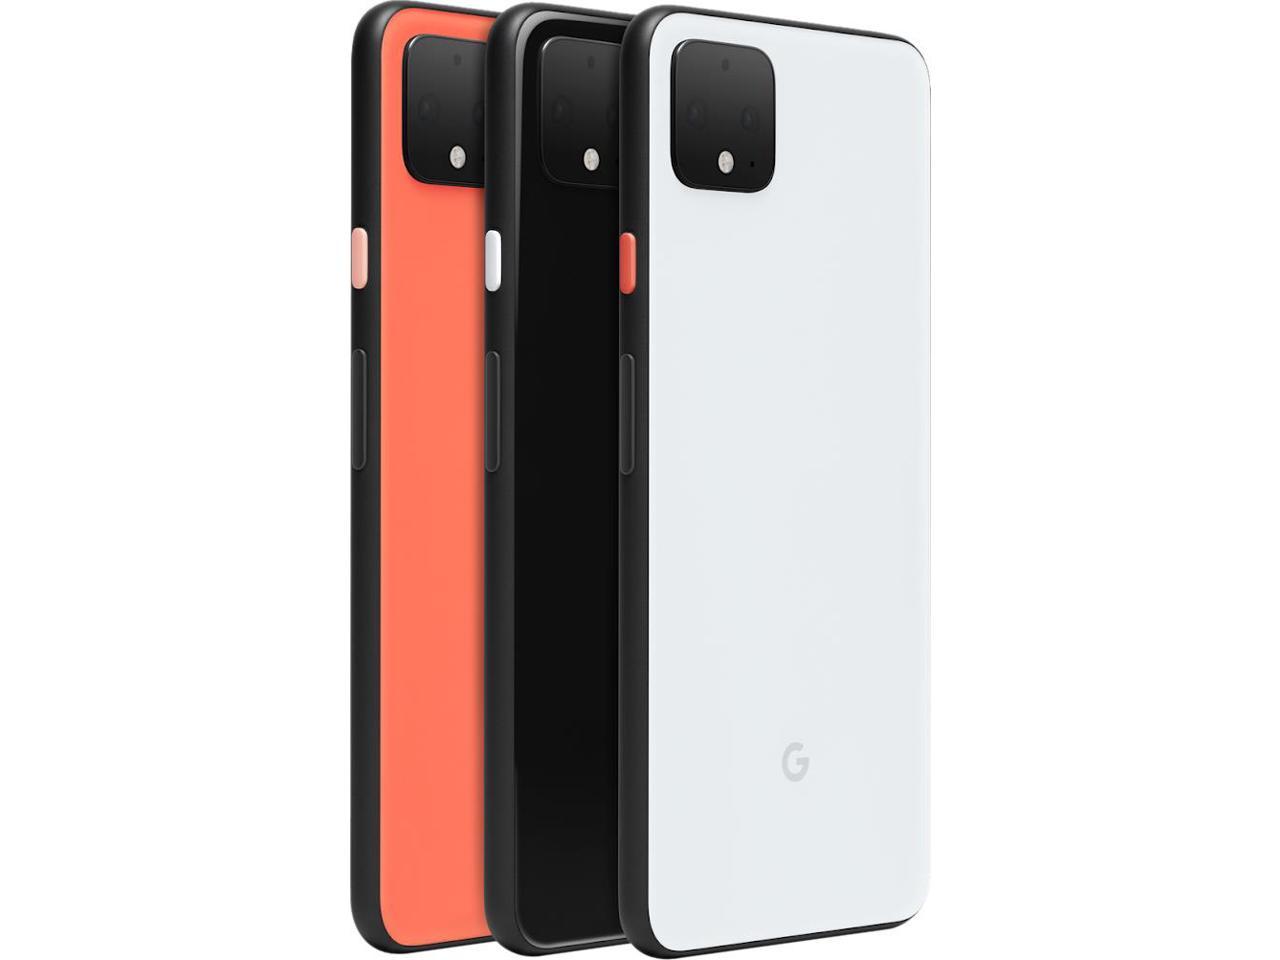 Google Pixel 4 XL 128GB Smartphone (Unlocked, Just Black) Smart 